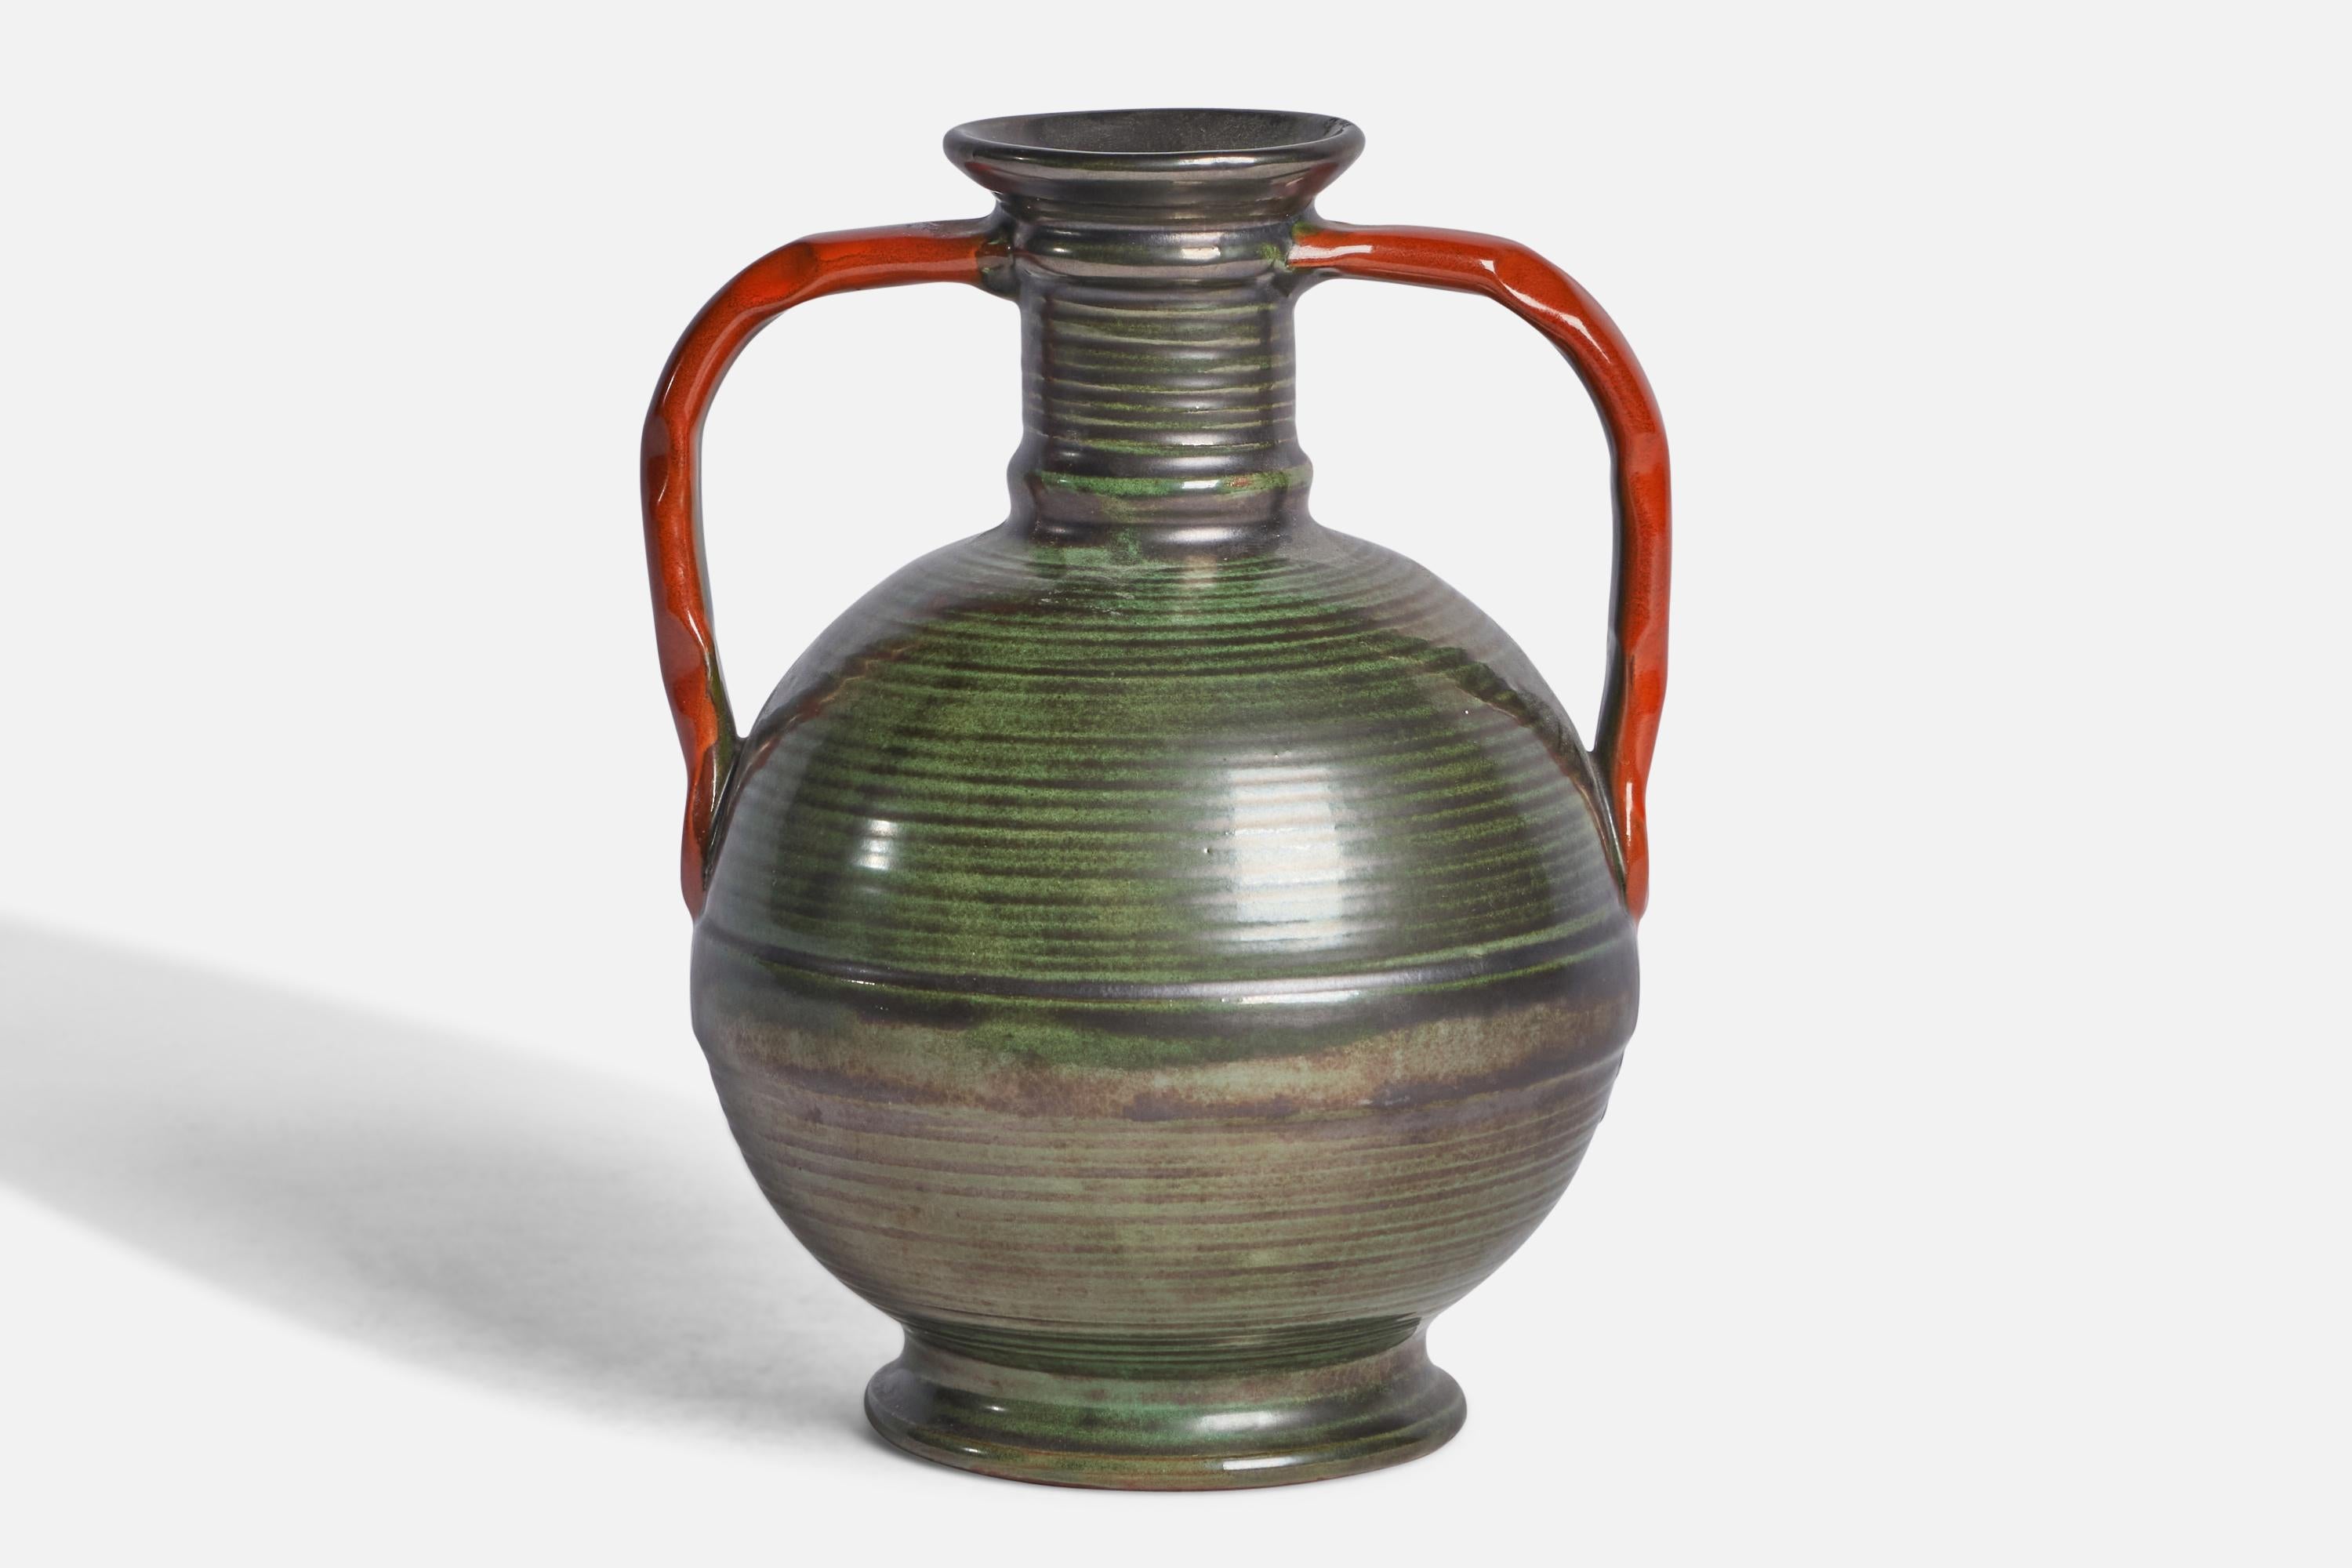 A green and orange-glazed incised earthenware vase designed and produced by Upsala Ekeby, Sweden, 1930s.